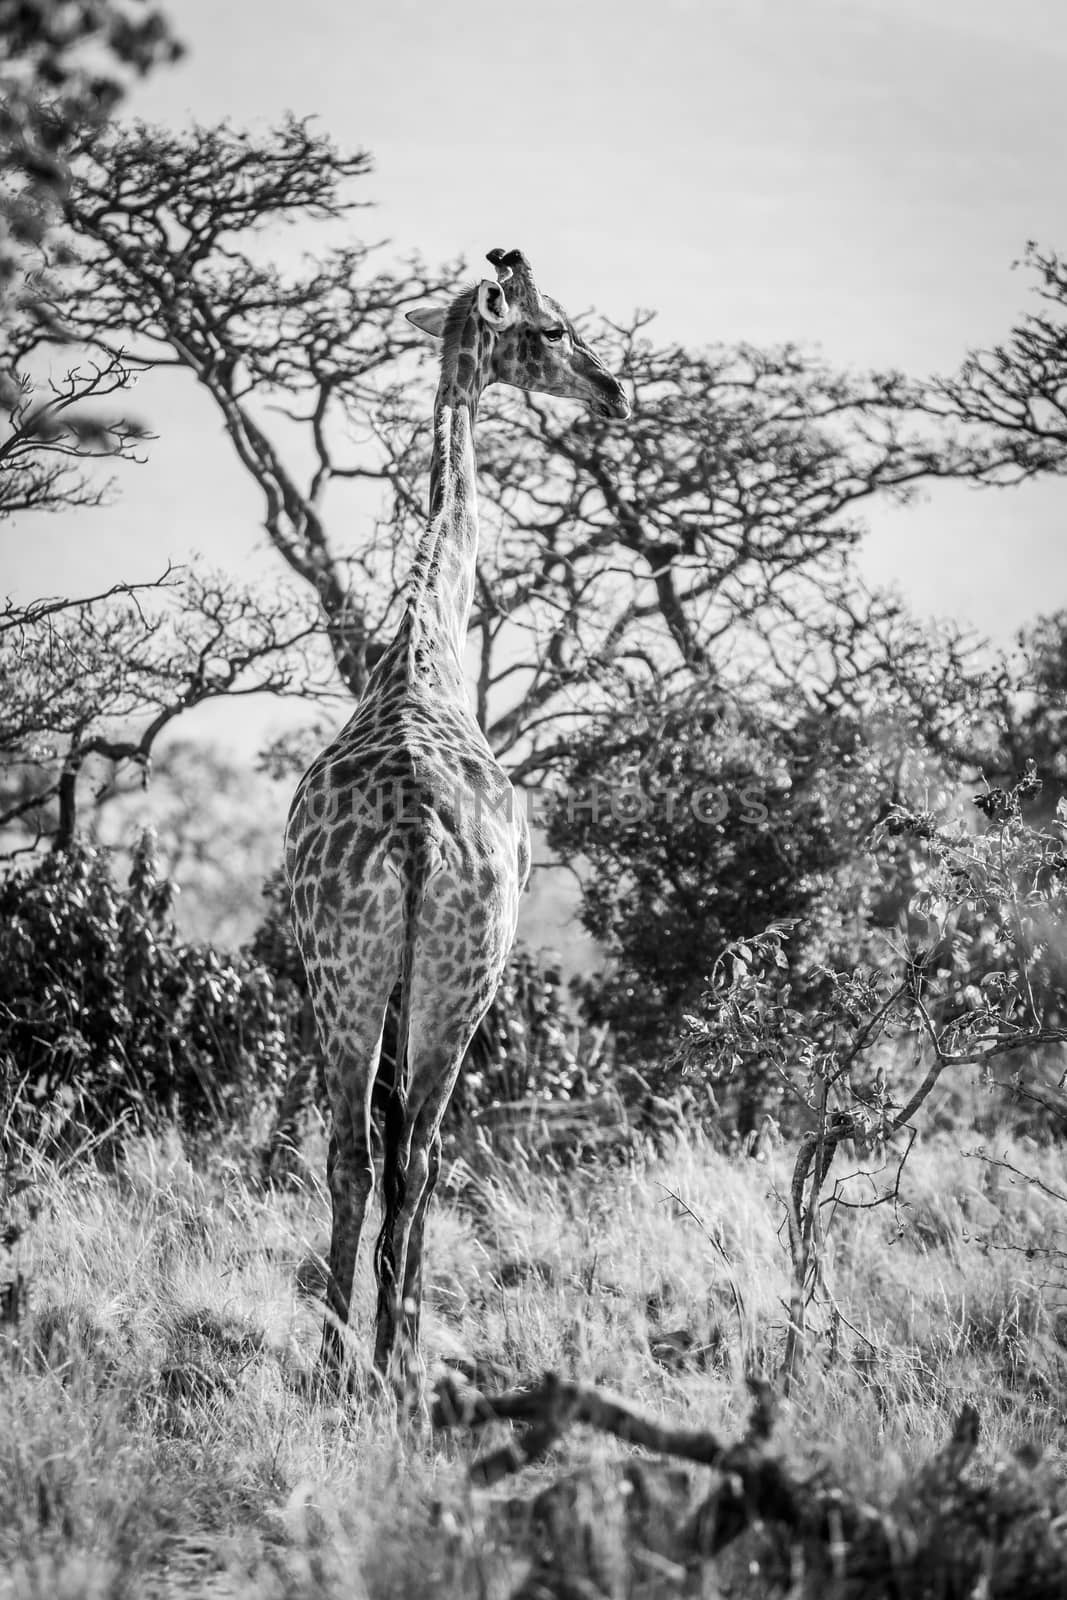 Giraffe standing in the African bush. by Simoneemanphotography